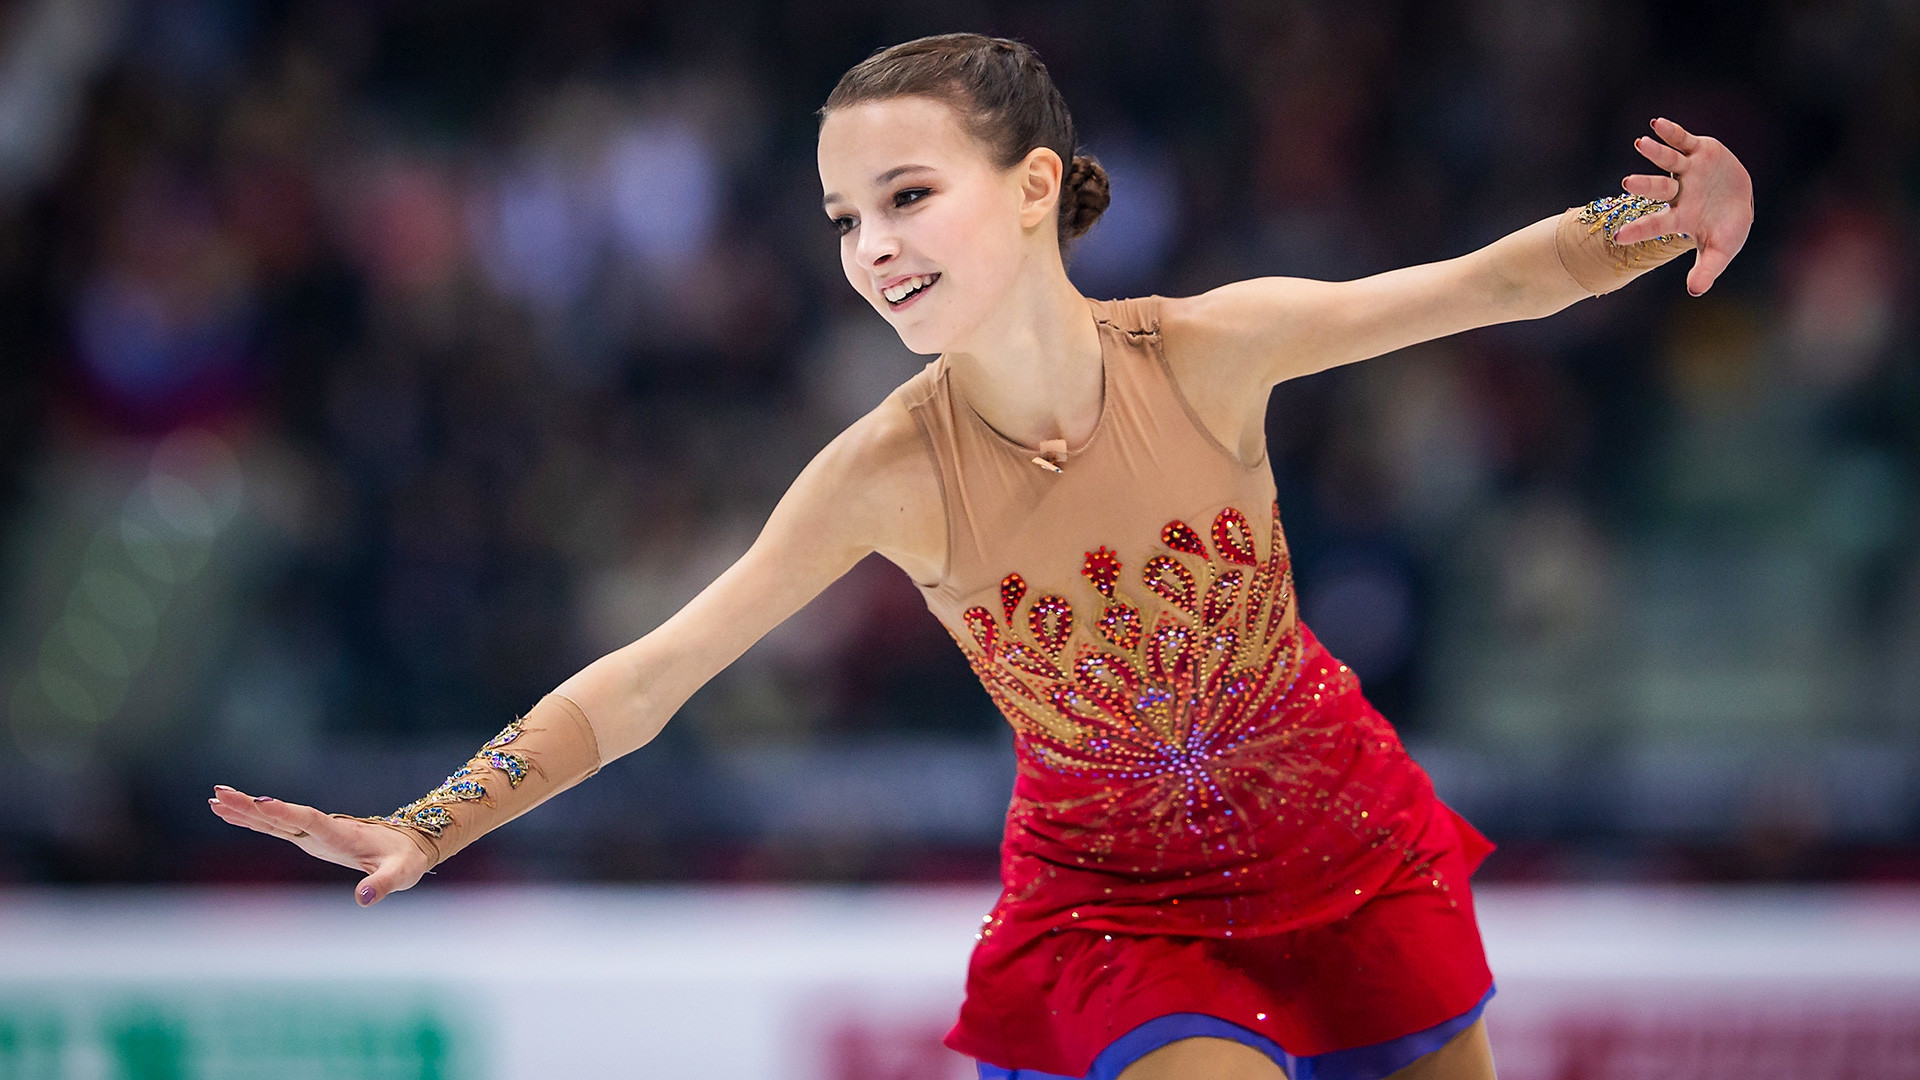 Meet Anna Shcherbakova, Russia’s newest (and most relentless) Figure Skating World Champion